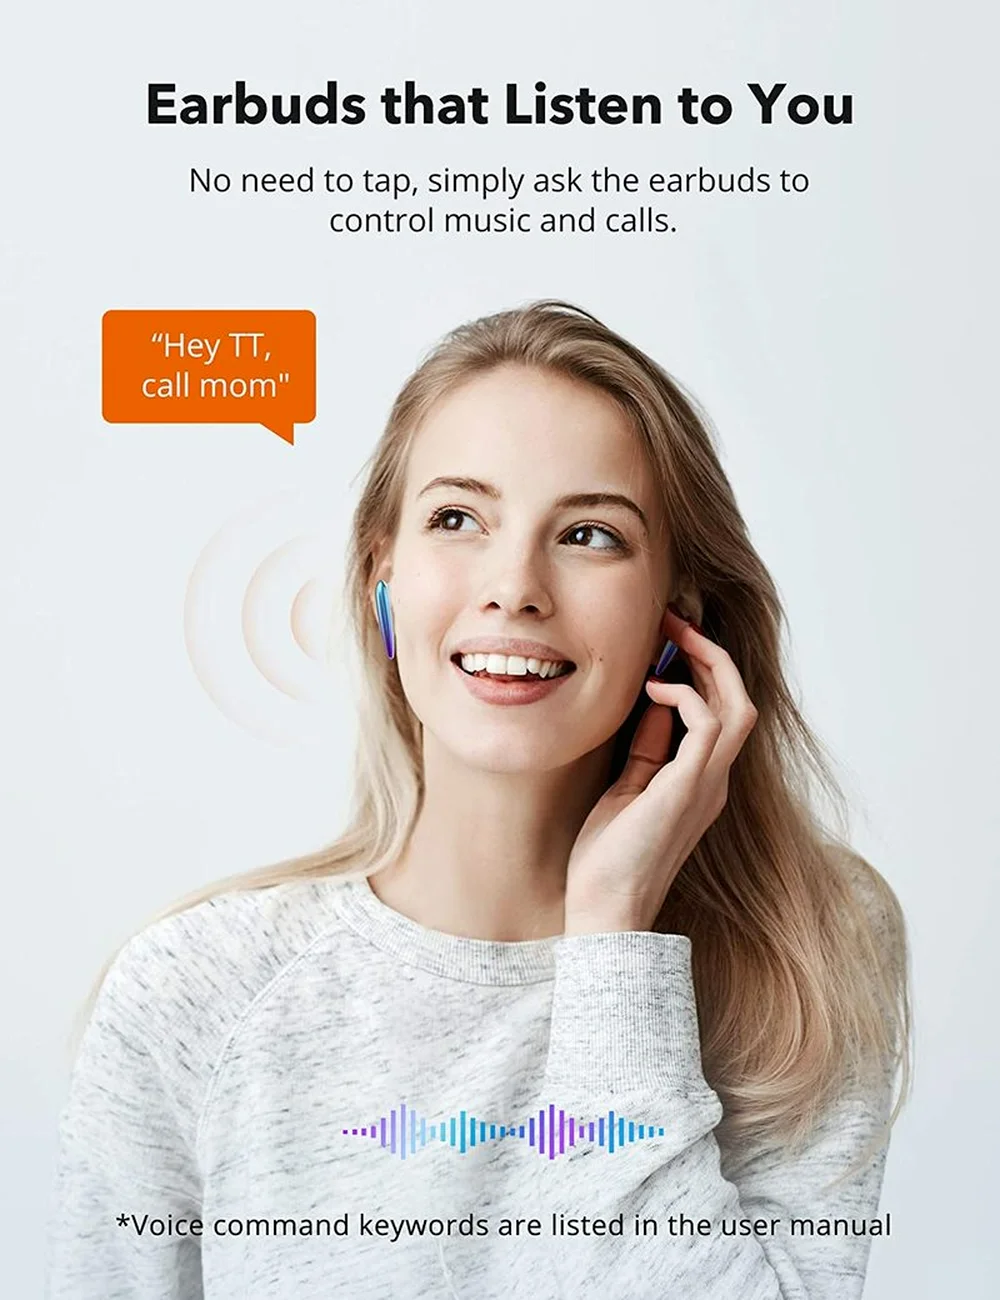 TaoTronics SoundLiberty 80 Bluetooth Earphones Wireless Earbuds TWS AptX IPX7 Waterproof Earphone with AI Noise Canceling Mic enlarge